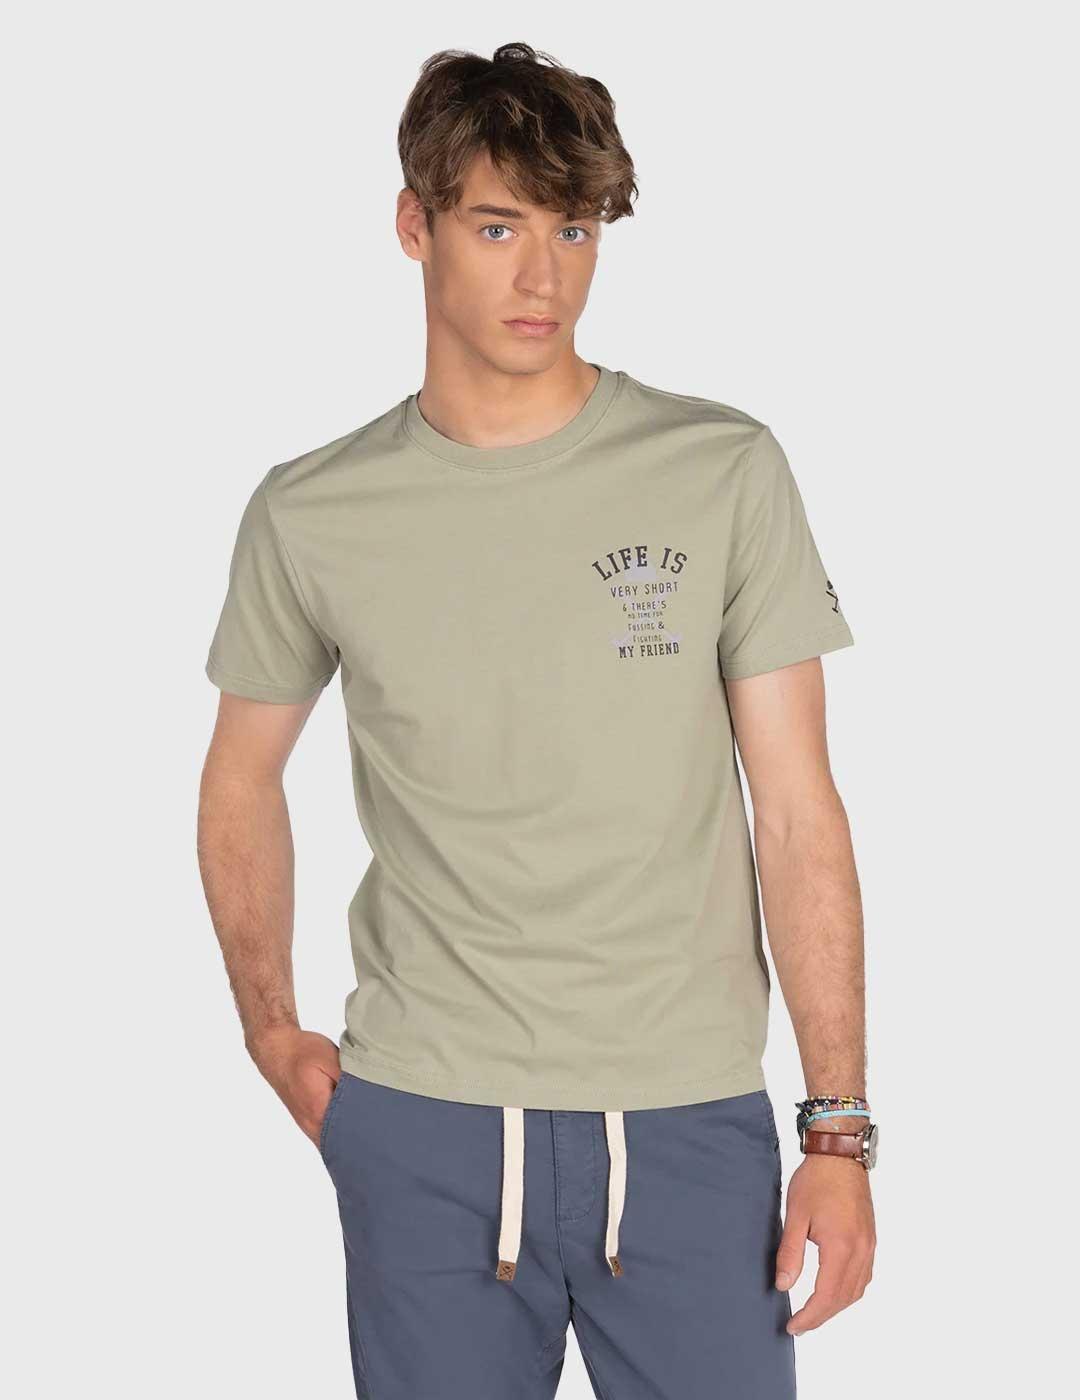 Harper & Neyer Camiseta Life verde militar para hombre